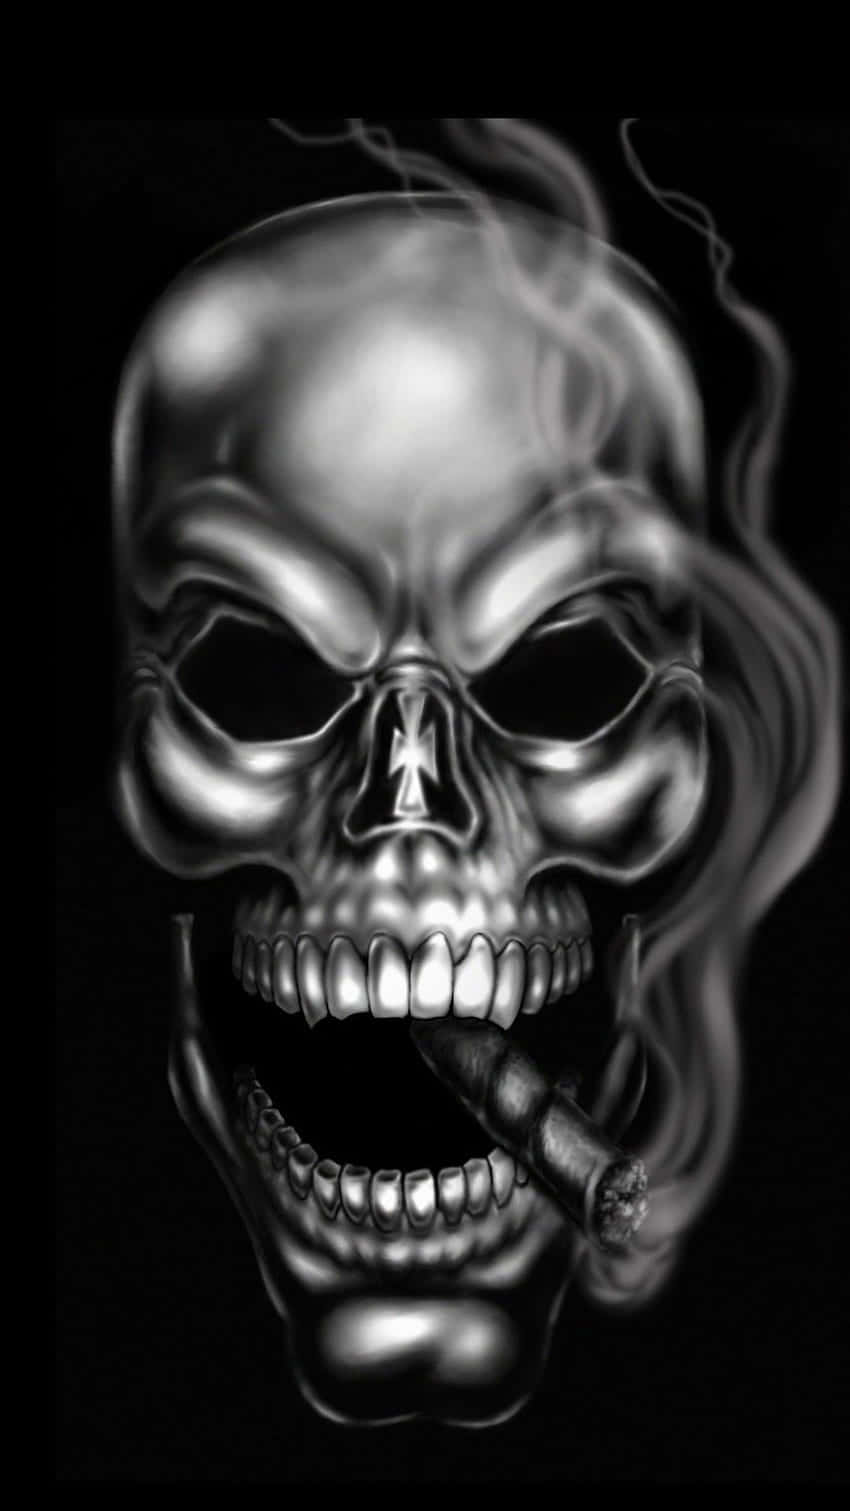 Skull Smoking A Joint Wallpaper